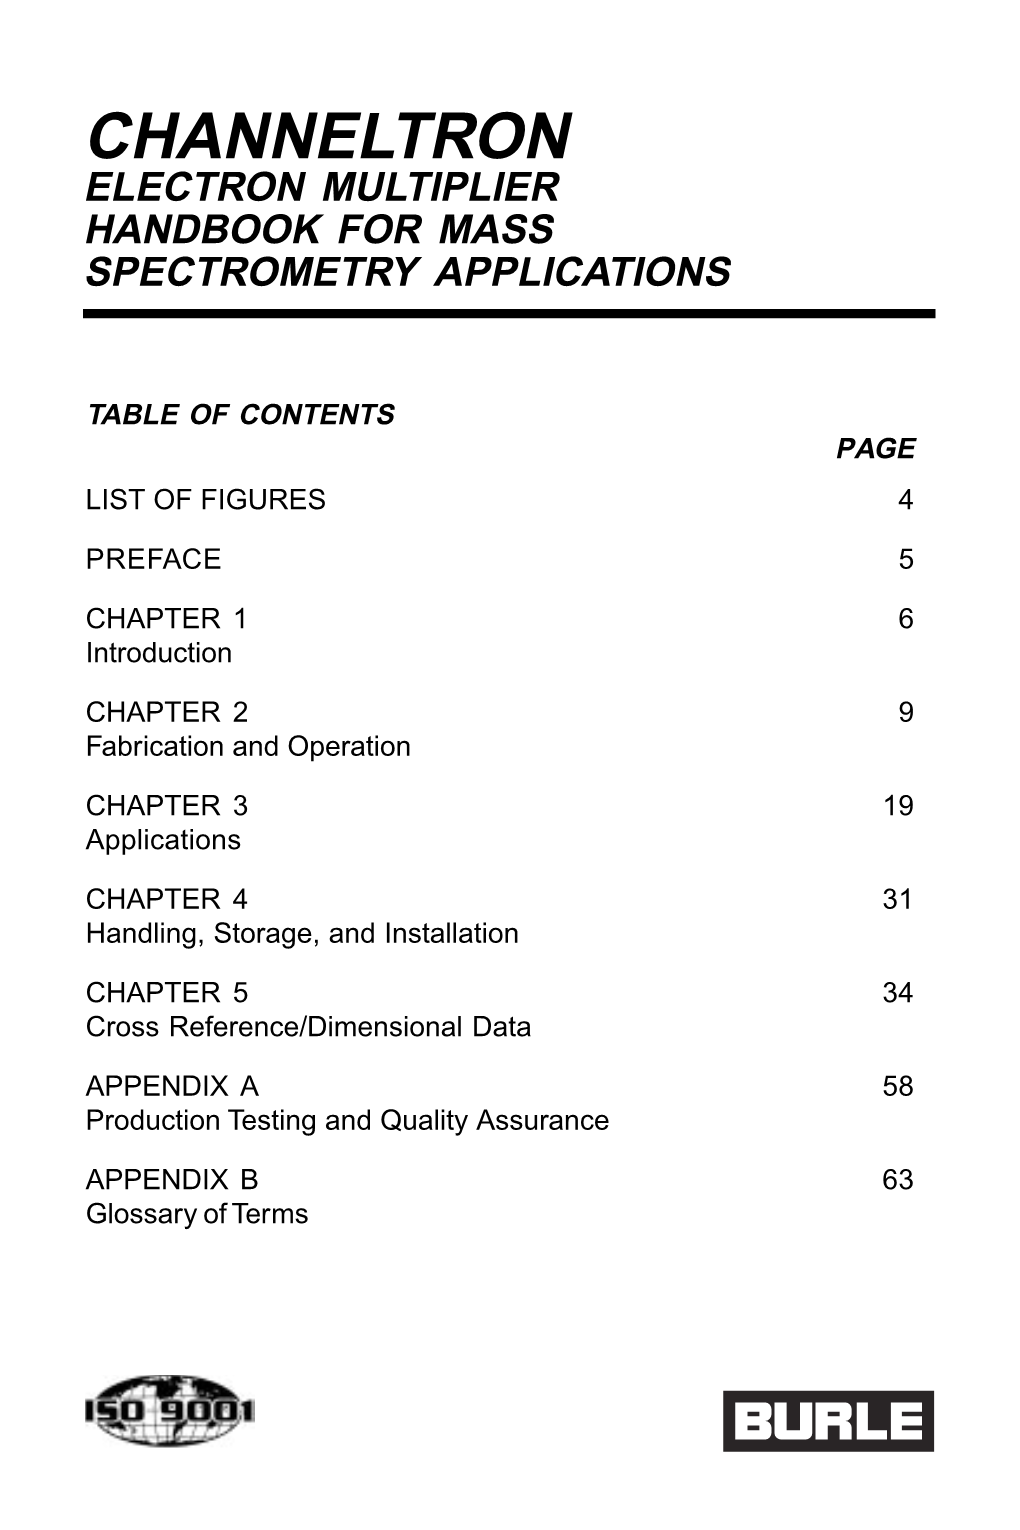 Channeltron Electron Multiplier Handbook for Mass Spectrometry Applications